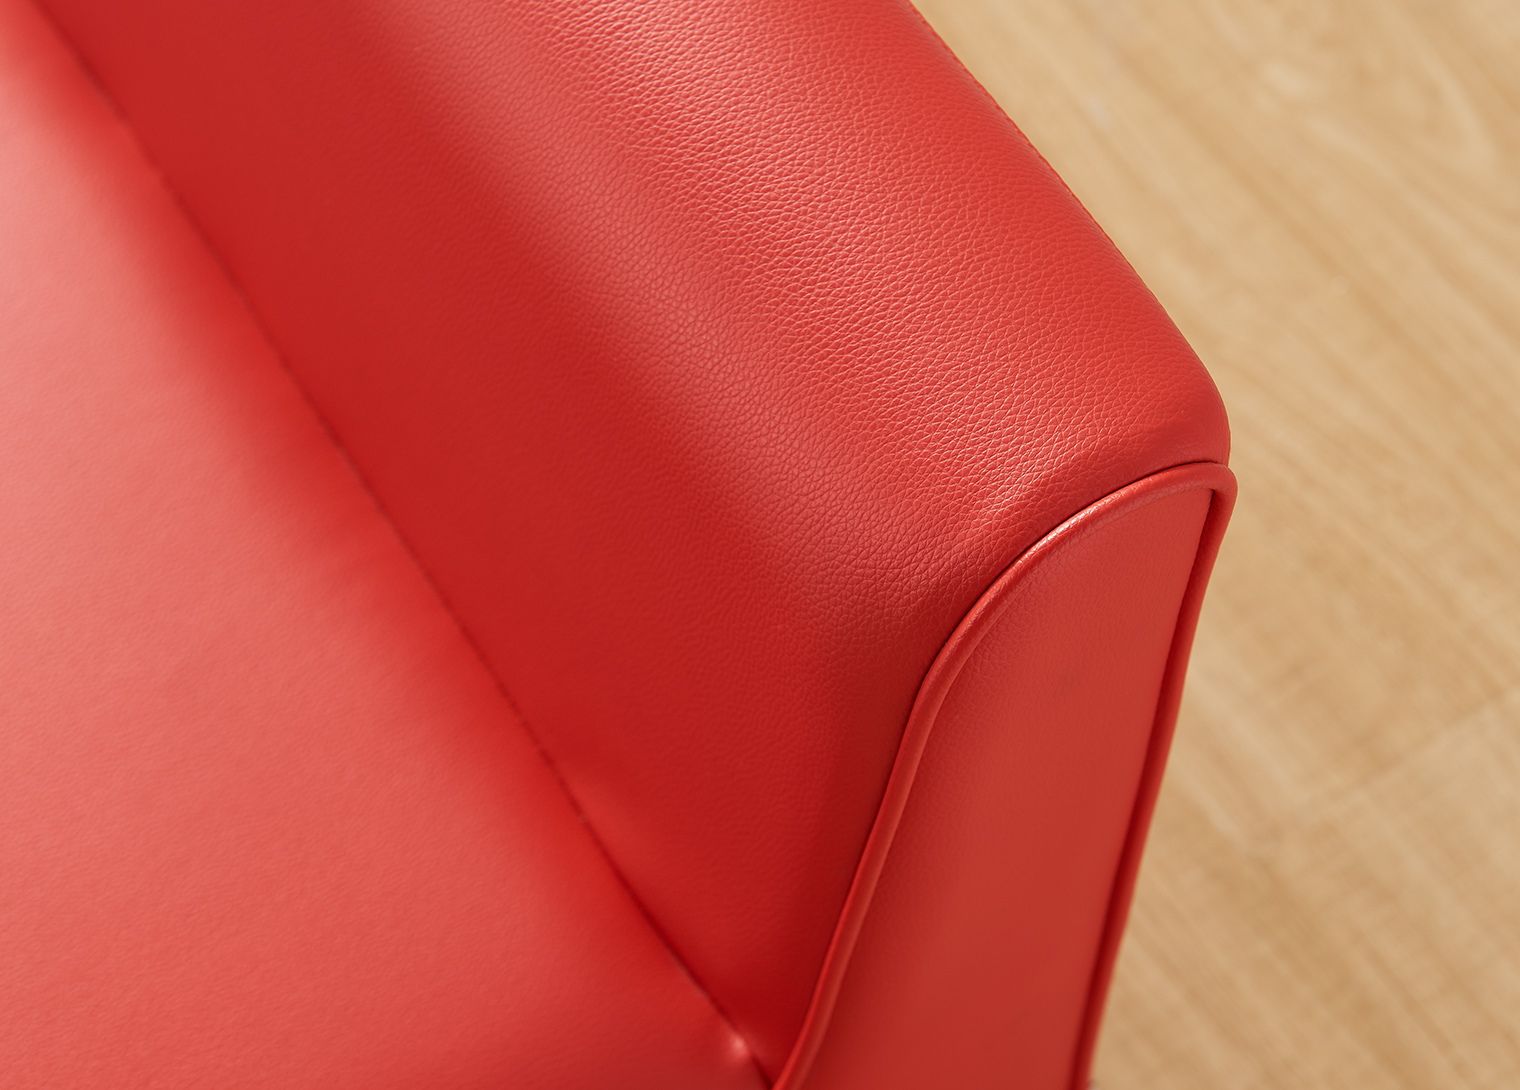 Modular Kids Sofa -  2-Seat Chair - Red